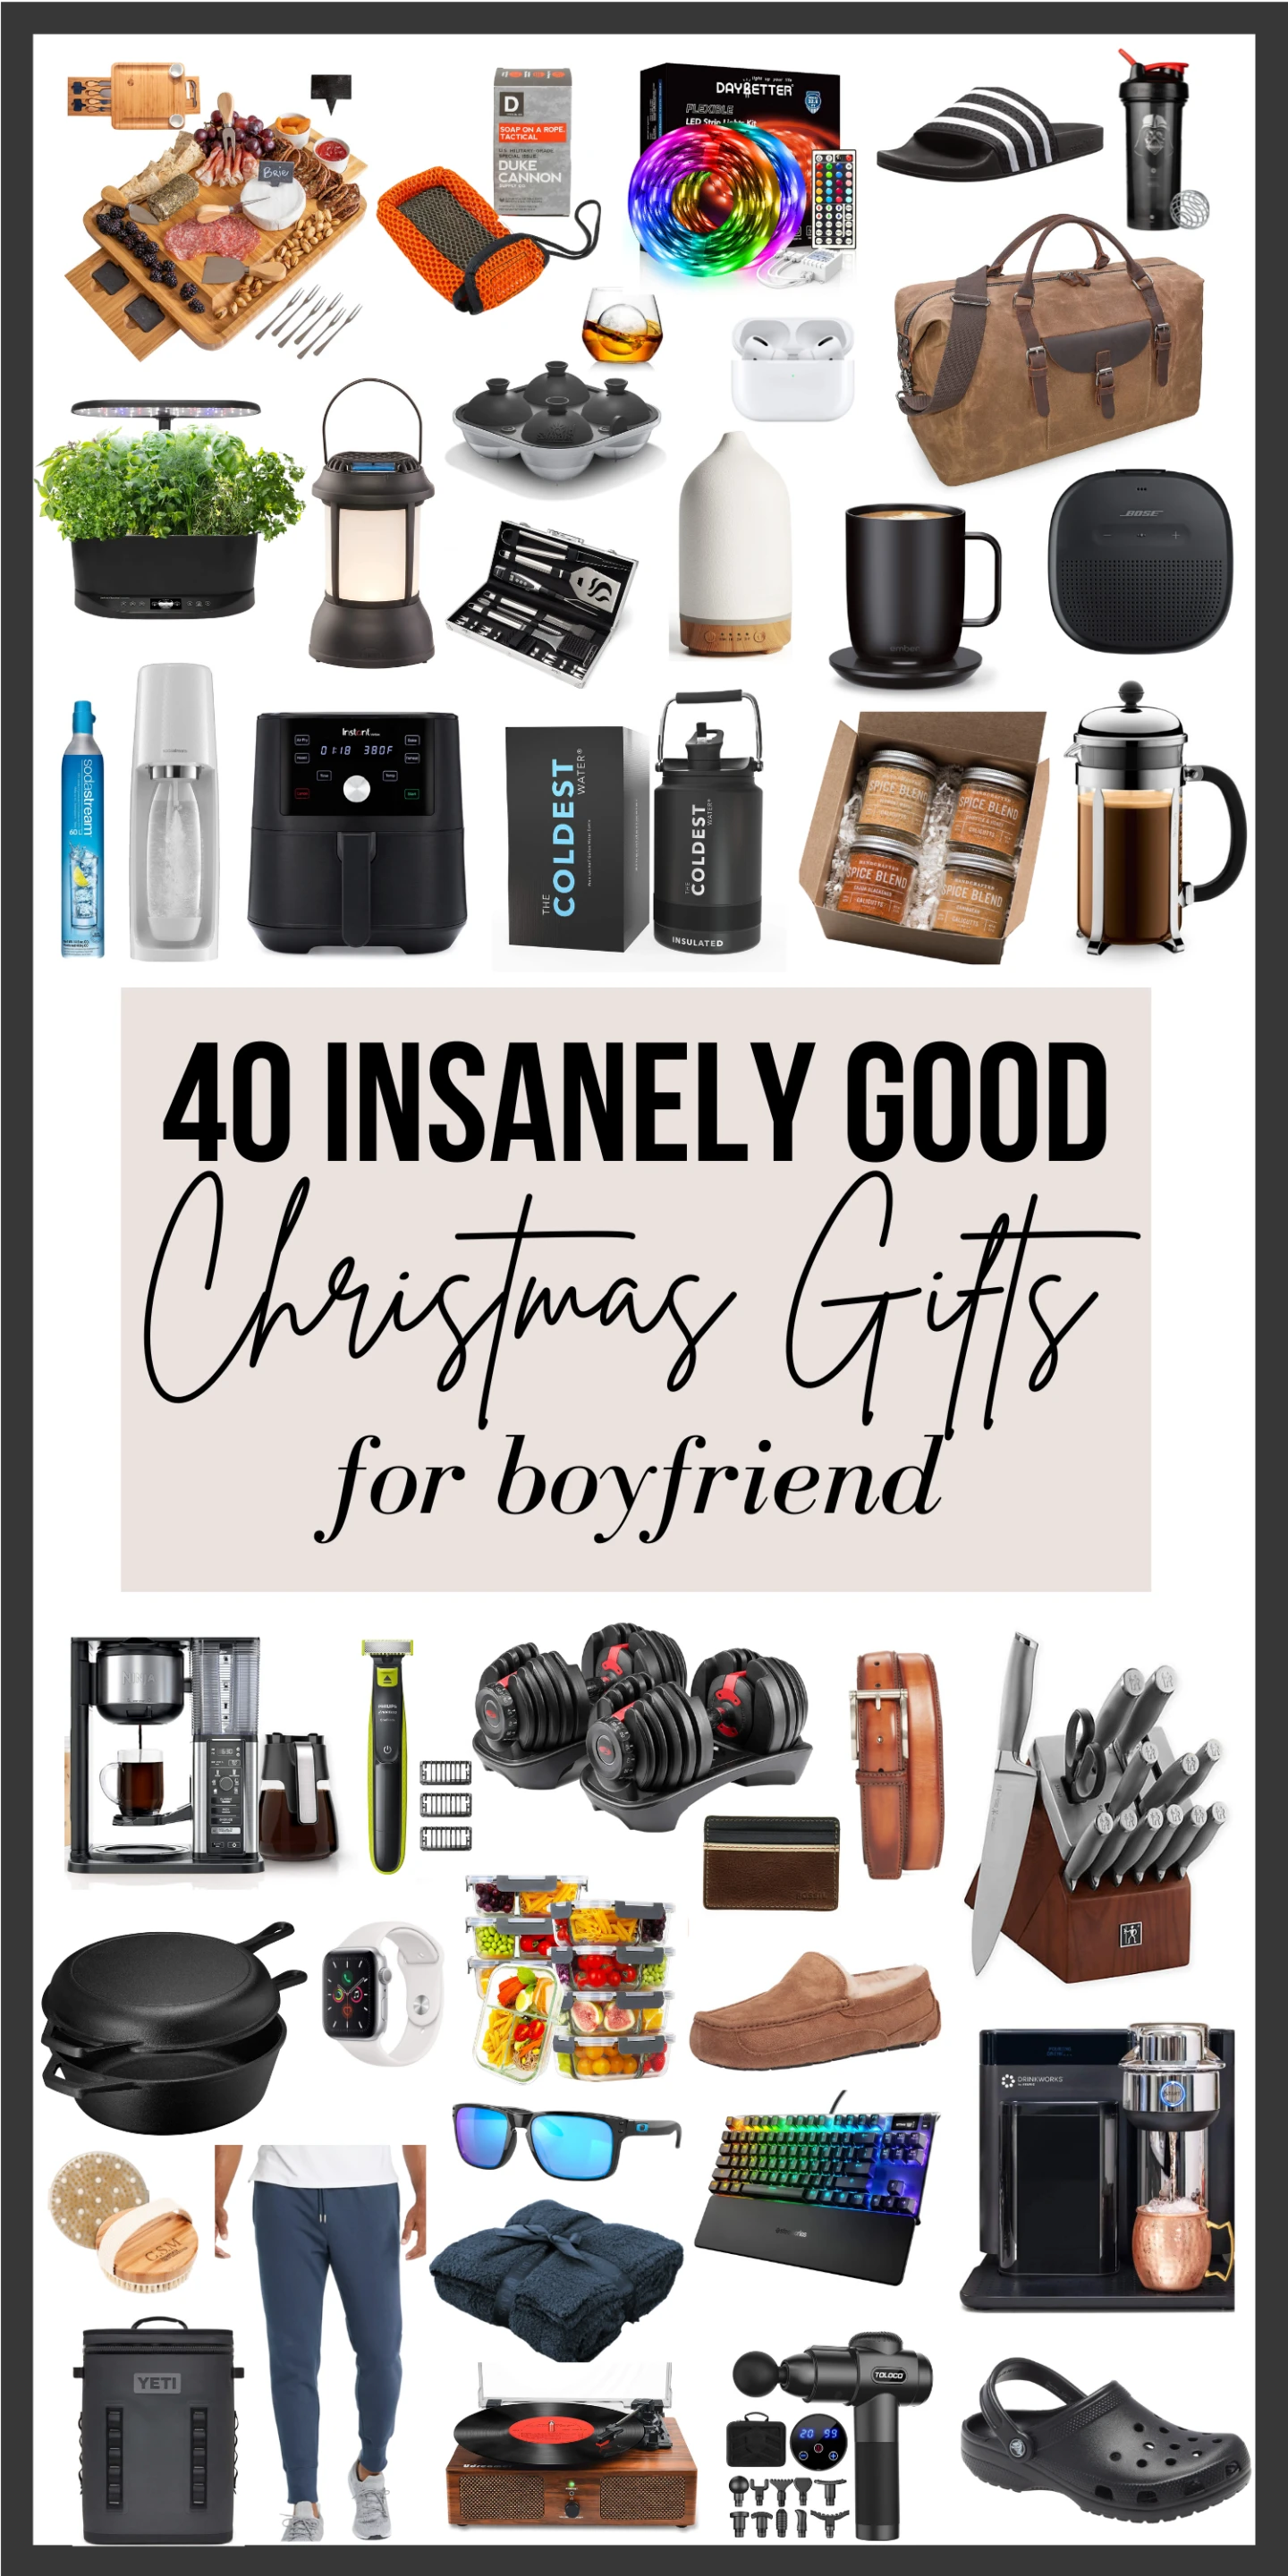 Boyfriend Gift idea | Gallery posted by AnnabelleDurbin | Lemon8